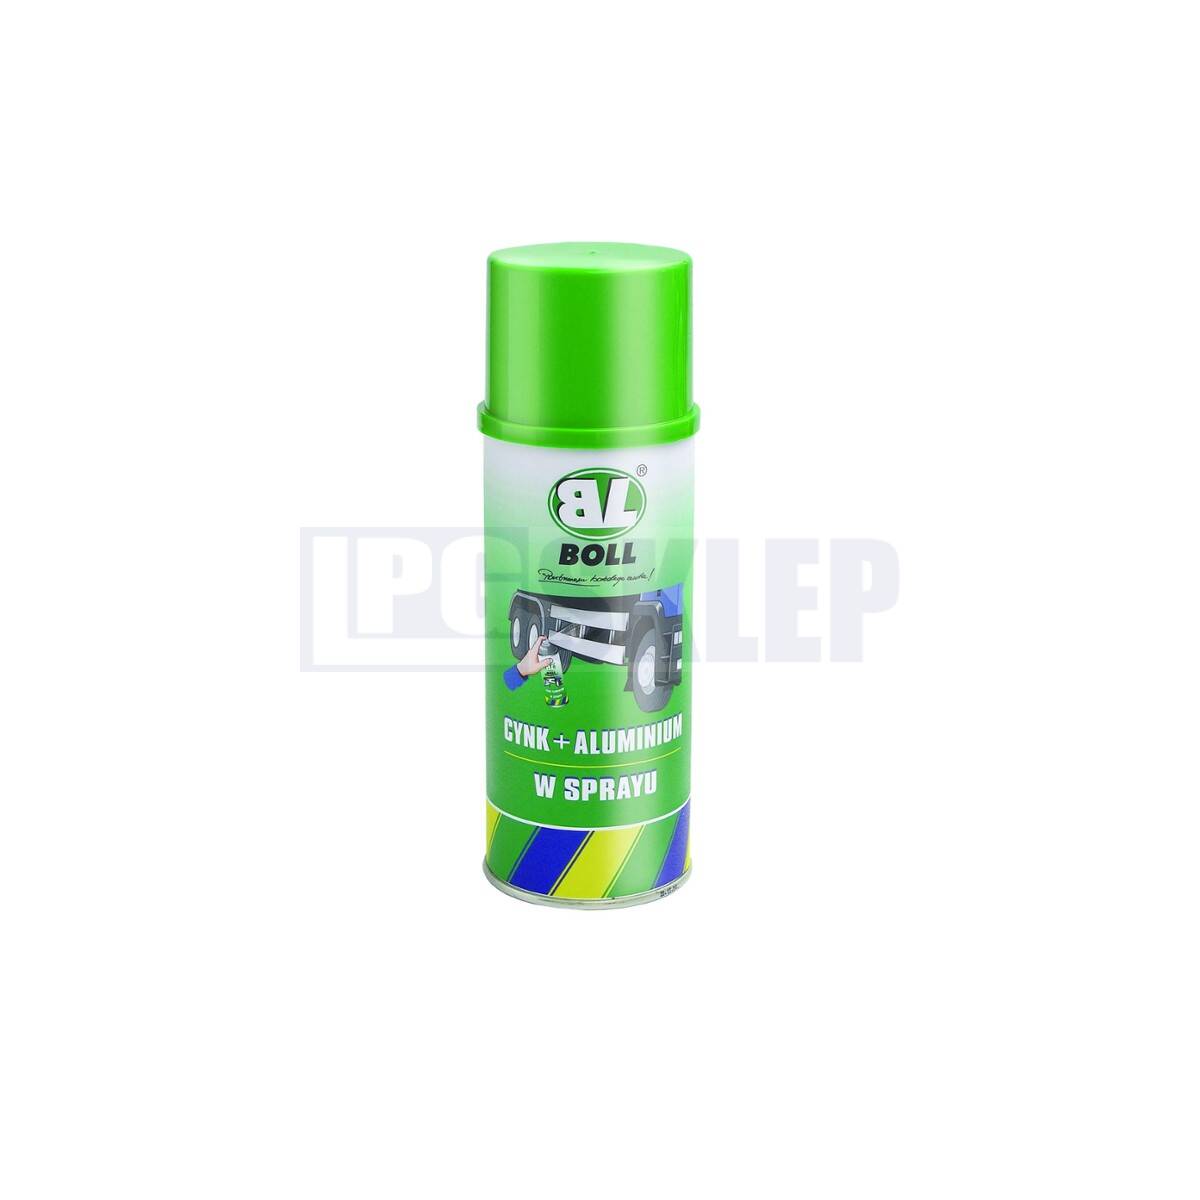 BOLL Cynk + aluminium - spray 400 ml